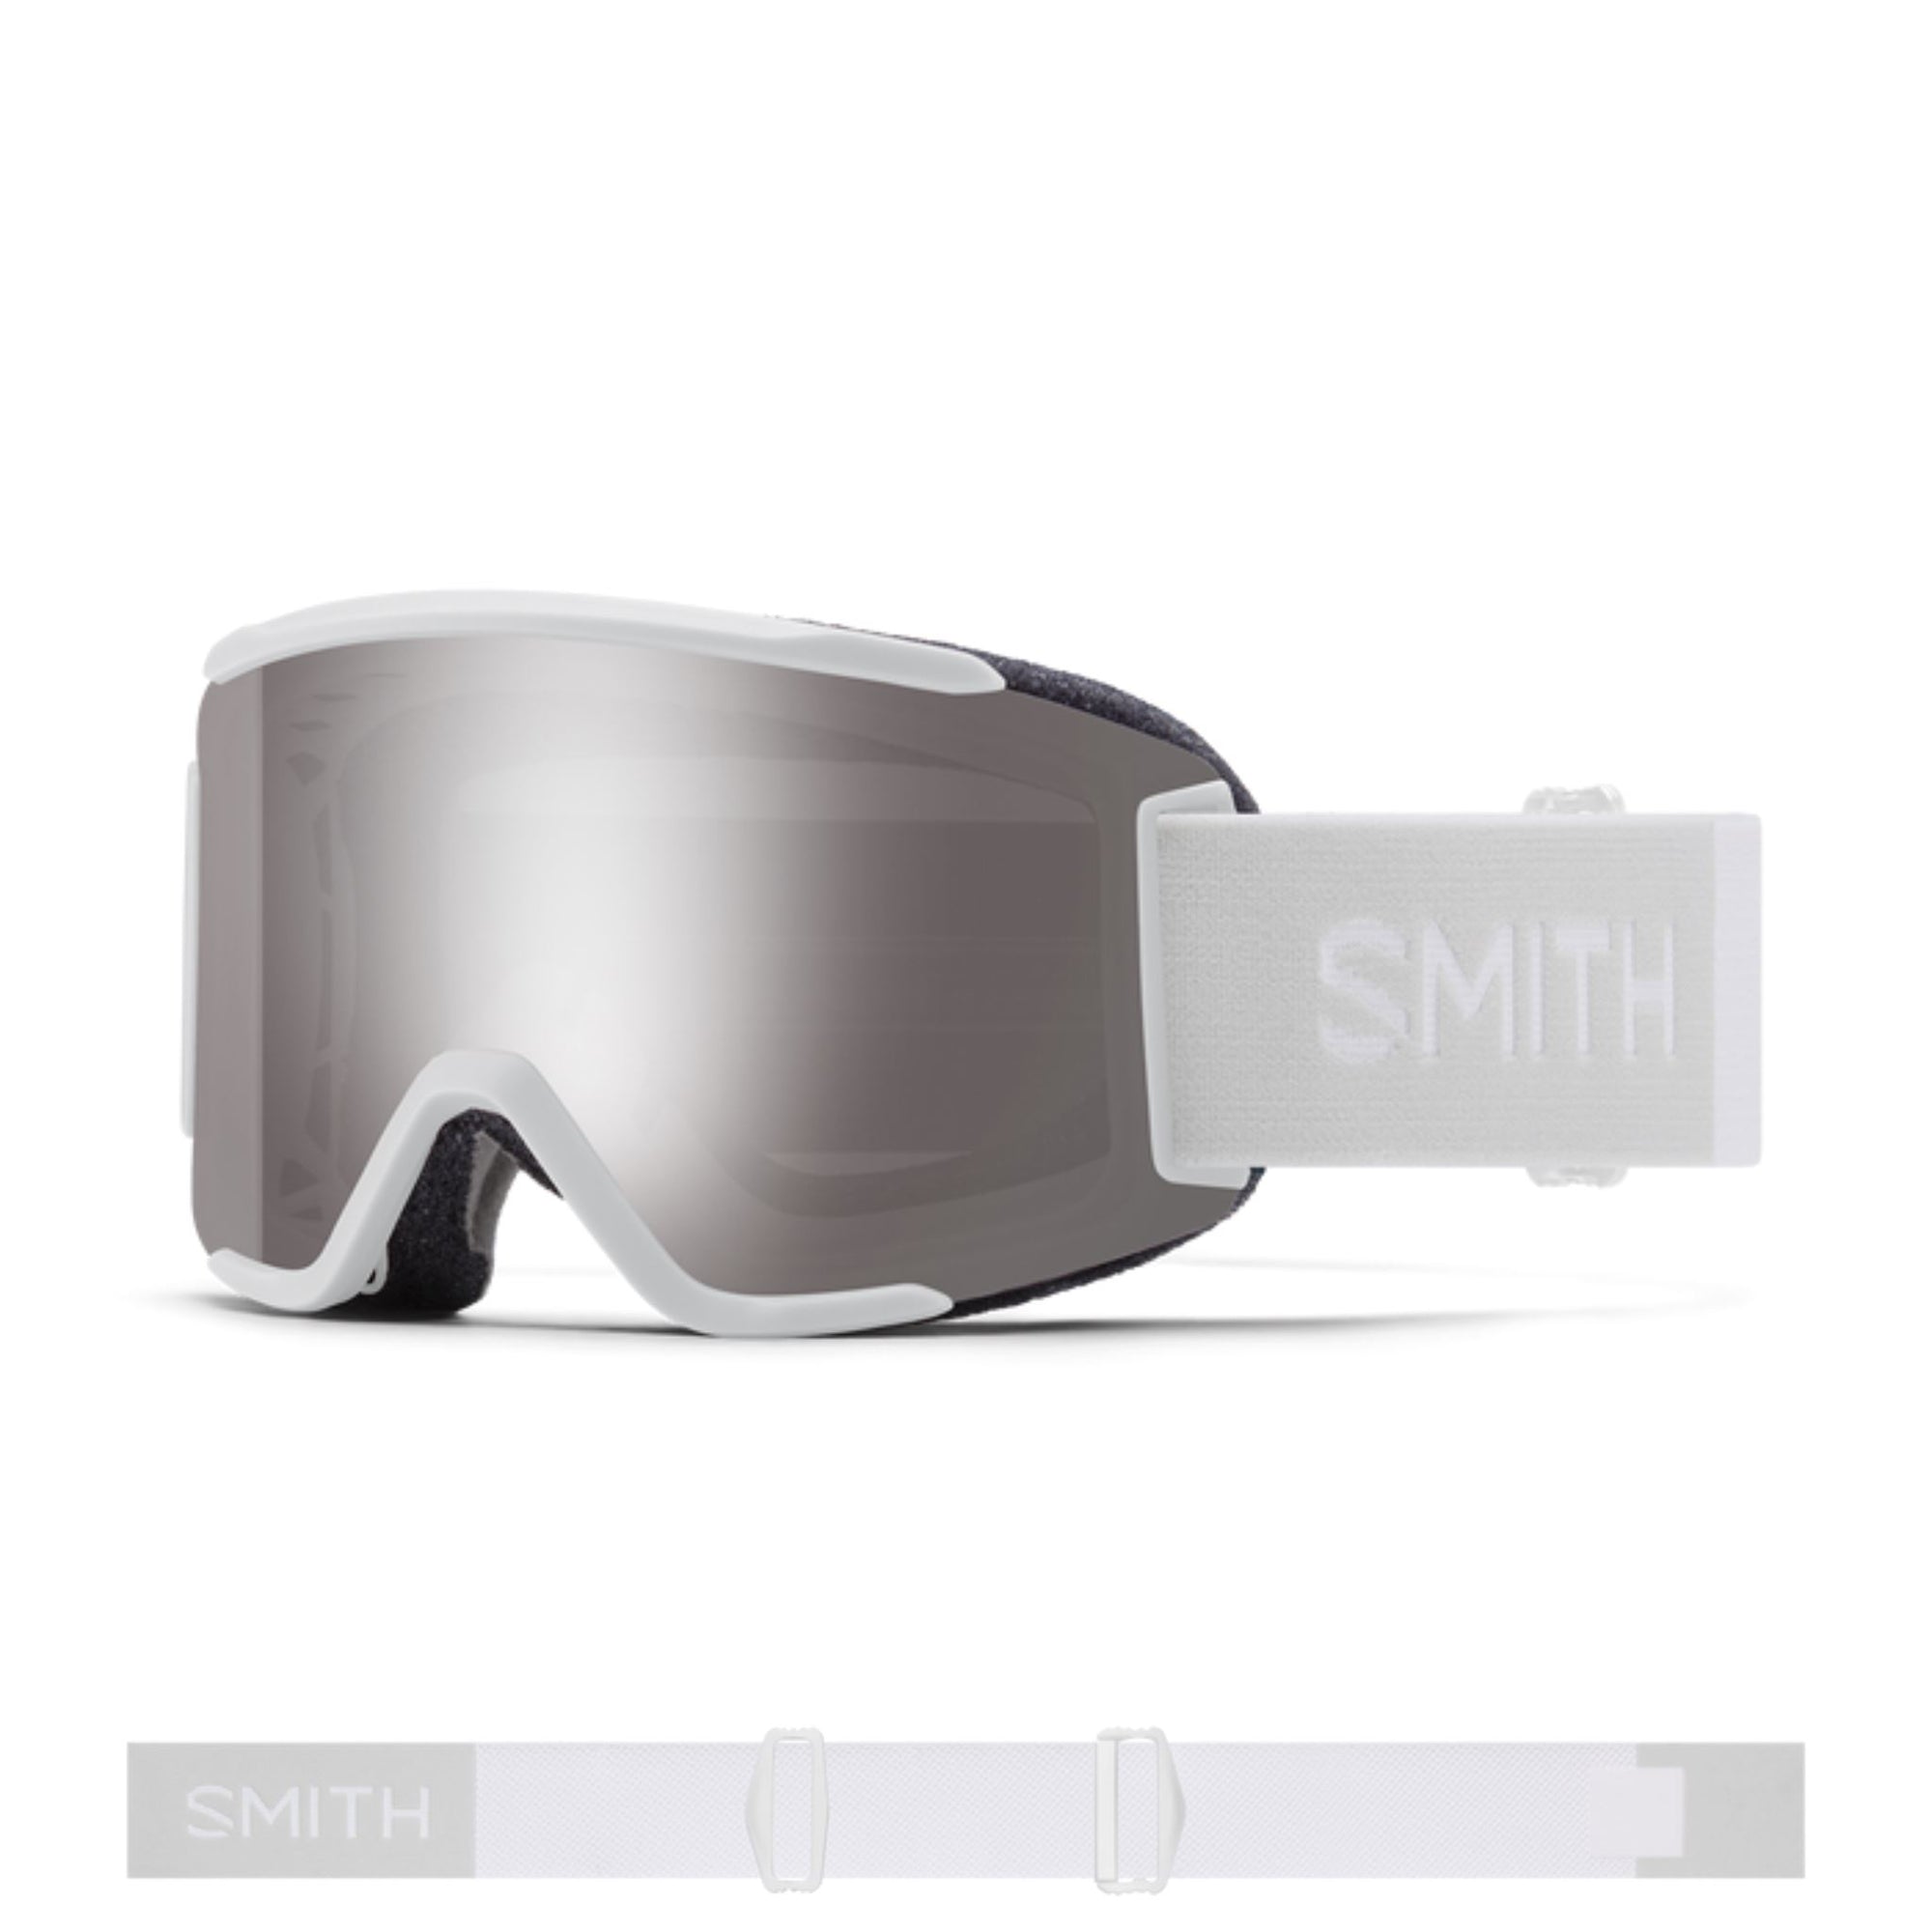 Smith Squad S Goggles (Small Fit) - White Vapor ChromaPop Sun Platinum Mirror Goggles Smith 